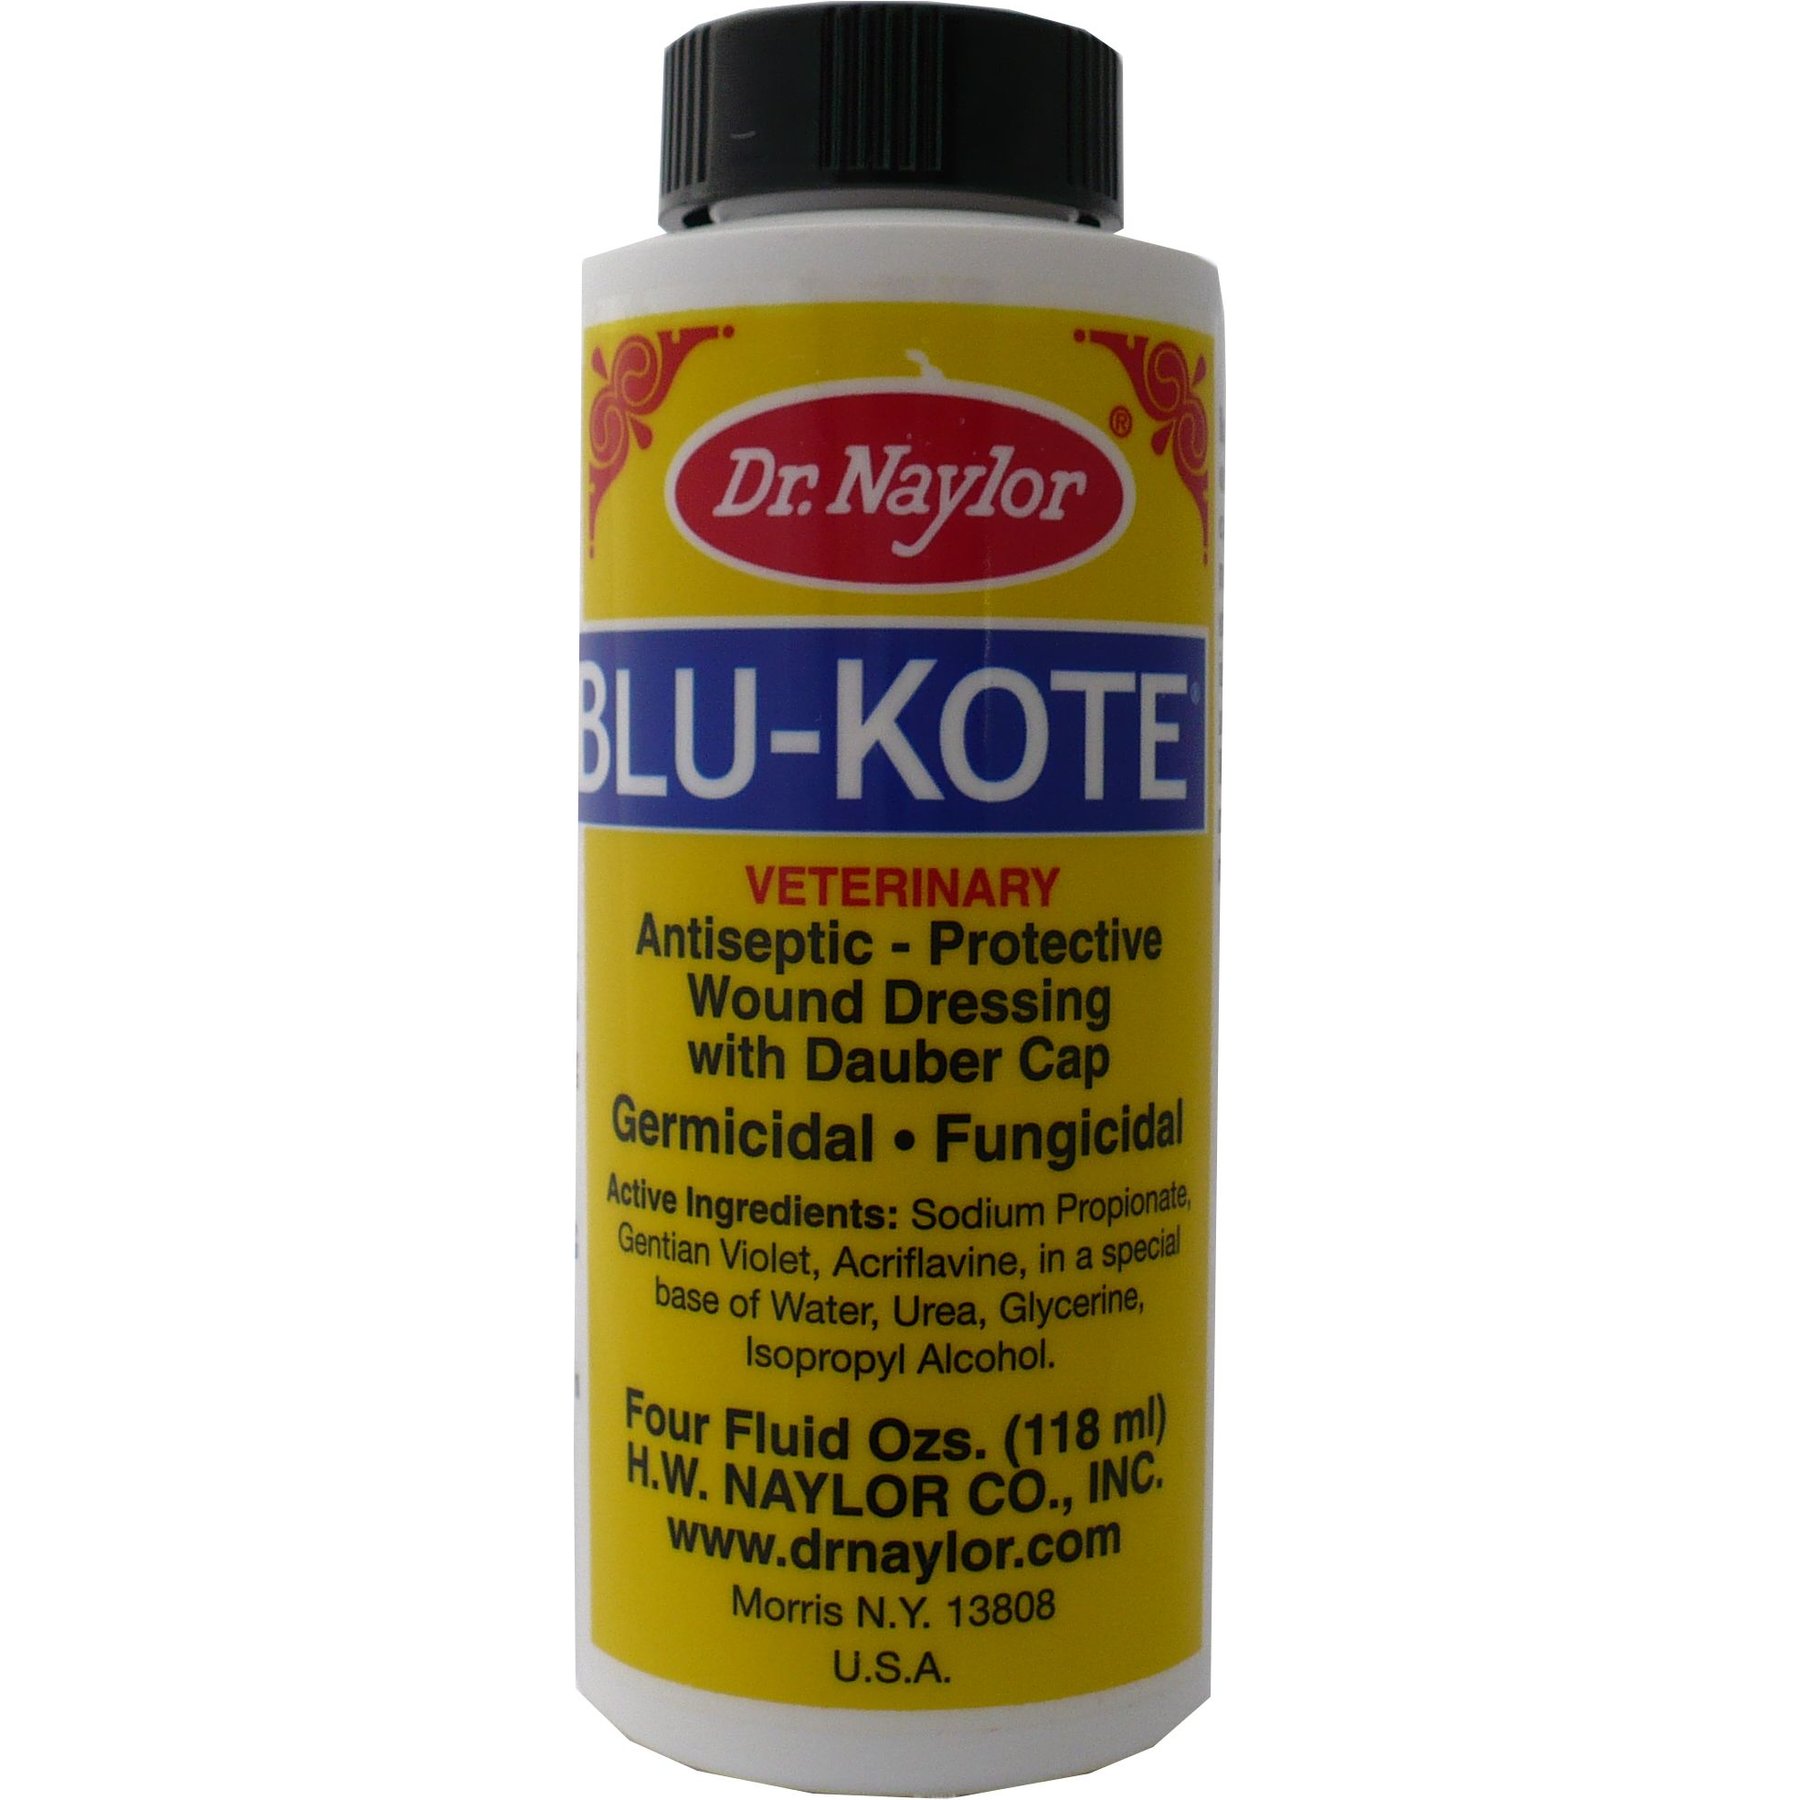 Kingslasher Blue Kote Anti Fungal Antiseptic Anti Viral Insect Repellant  Cream